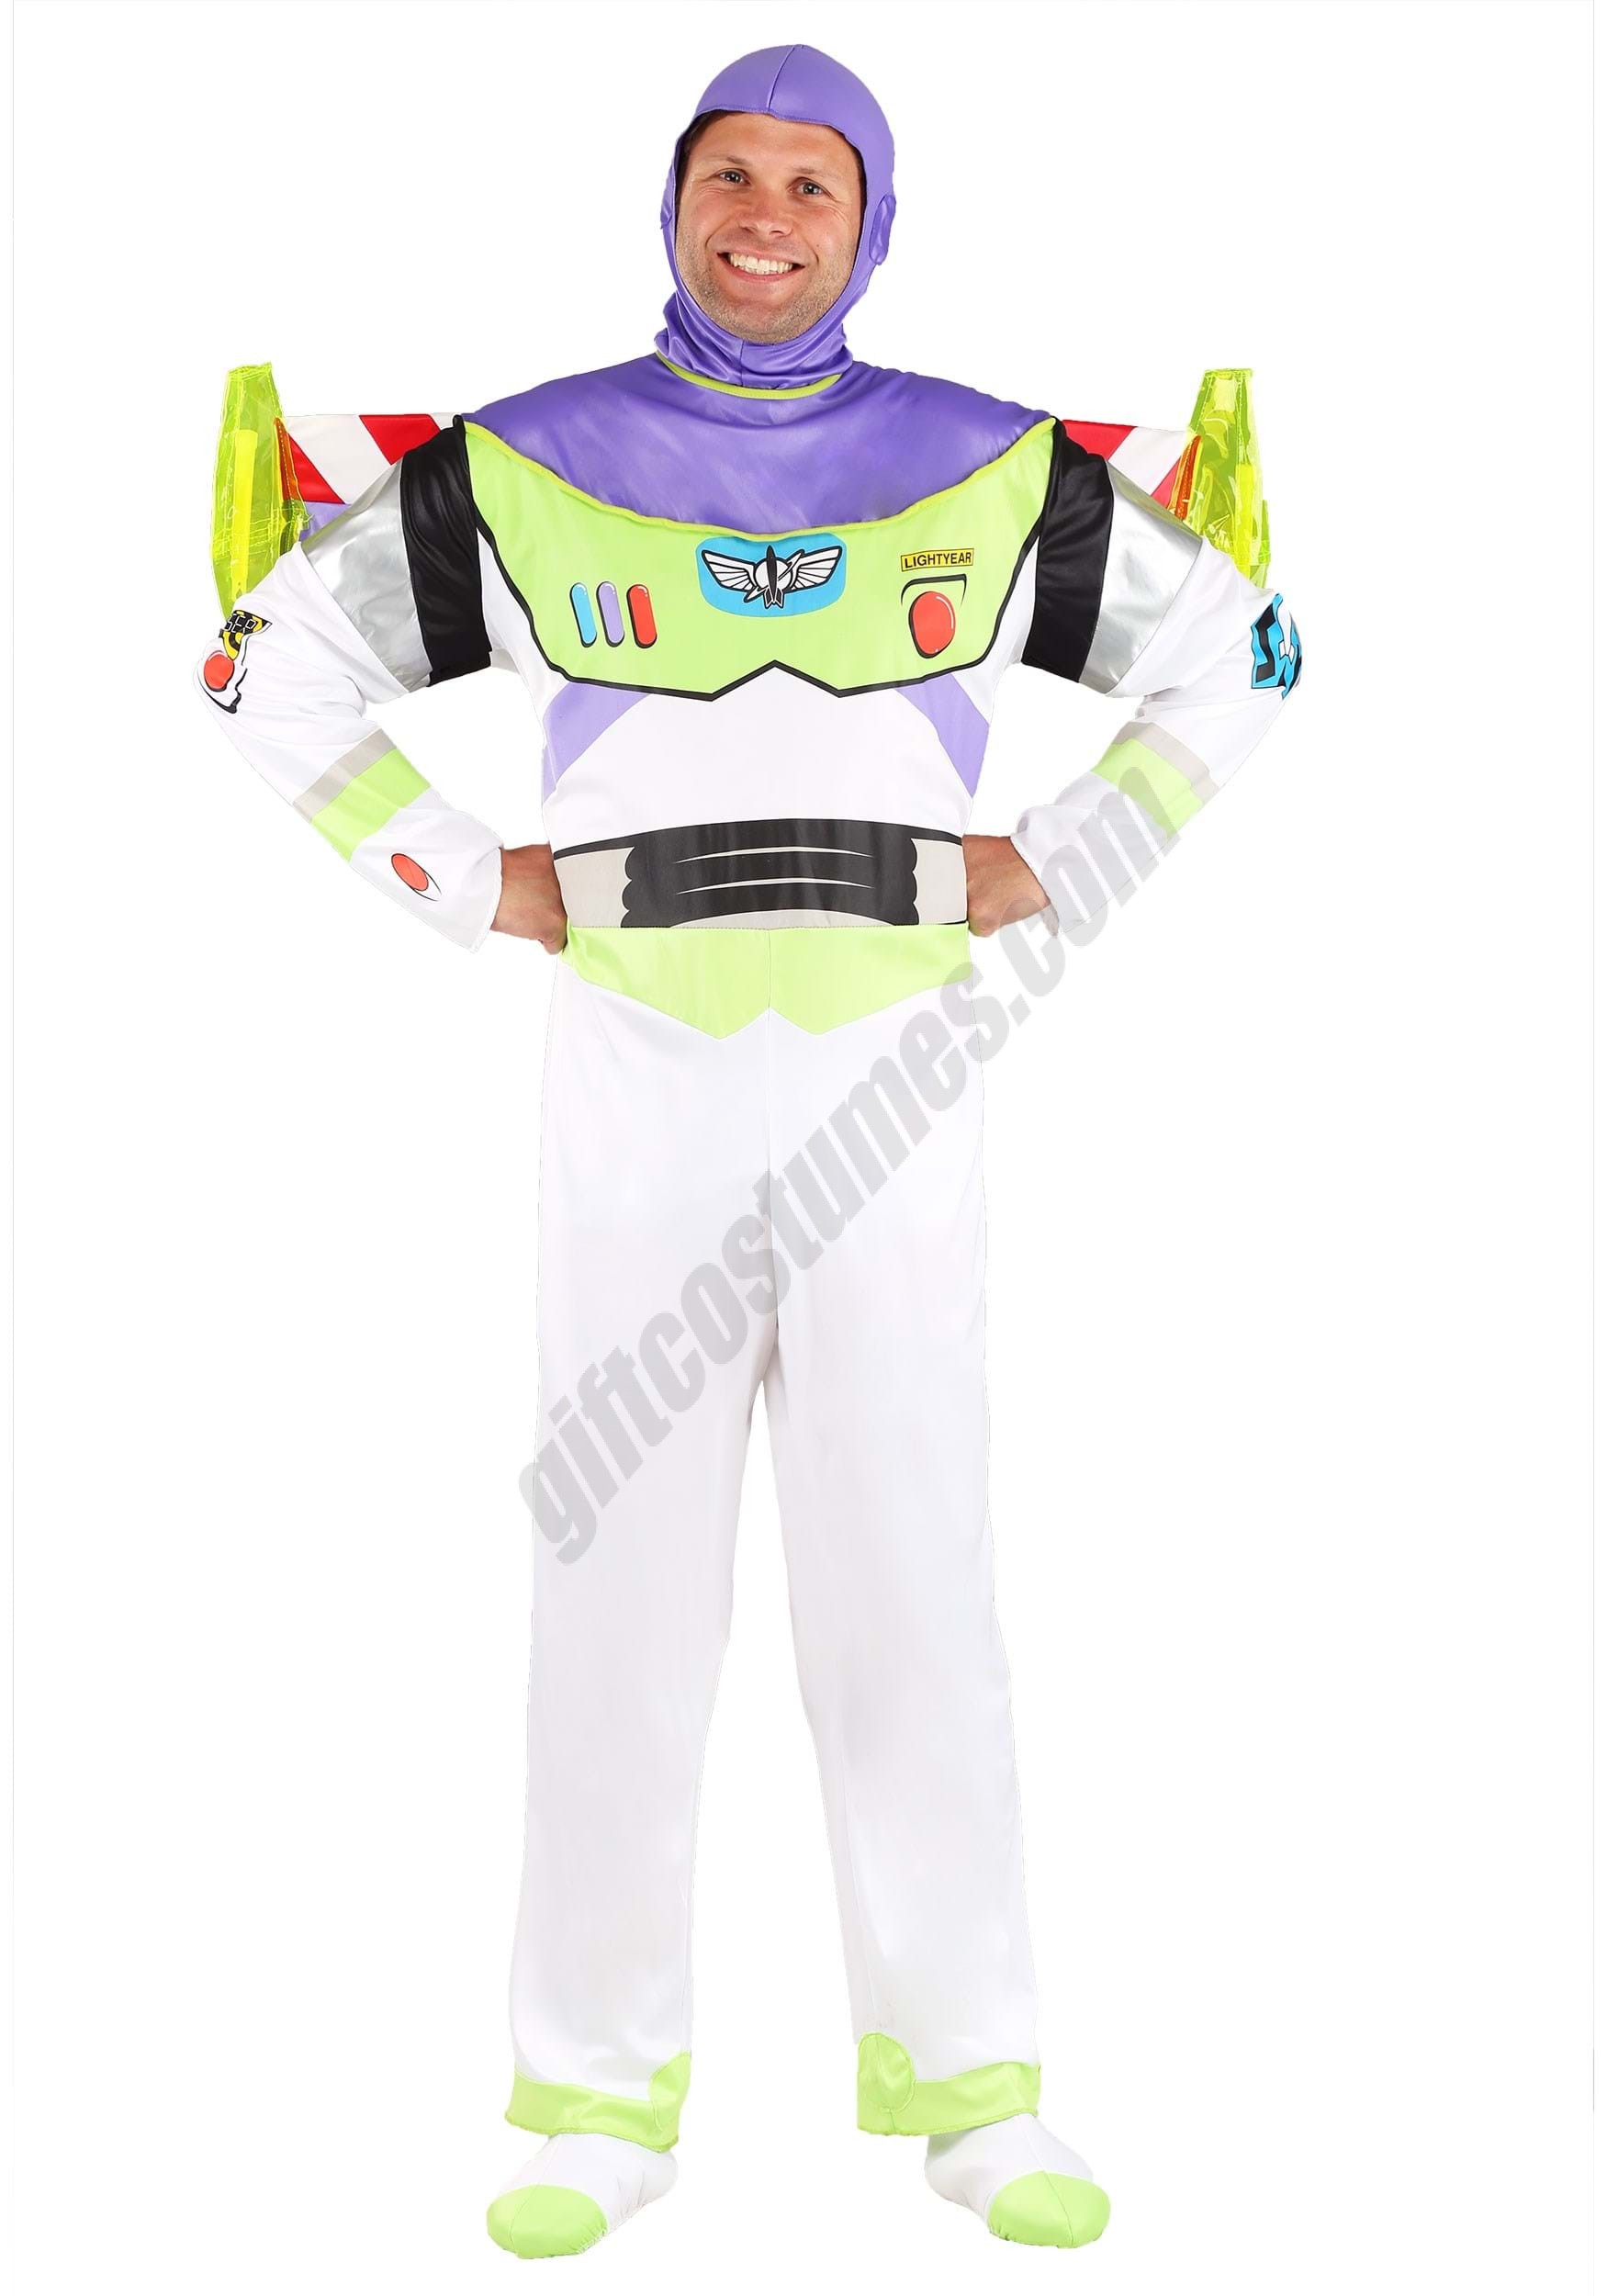 Deluxe Disney Toy Story Buzz Lightyear Costume for Adults Promotions - Deluxe Disney Toy Story Buzz Lightyear Costume for Adults Promotions